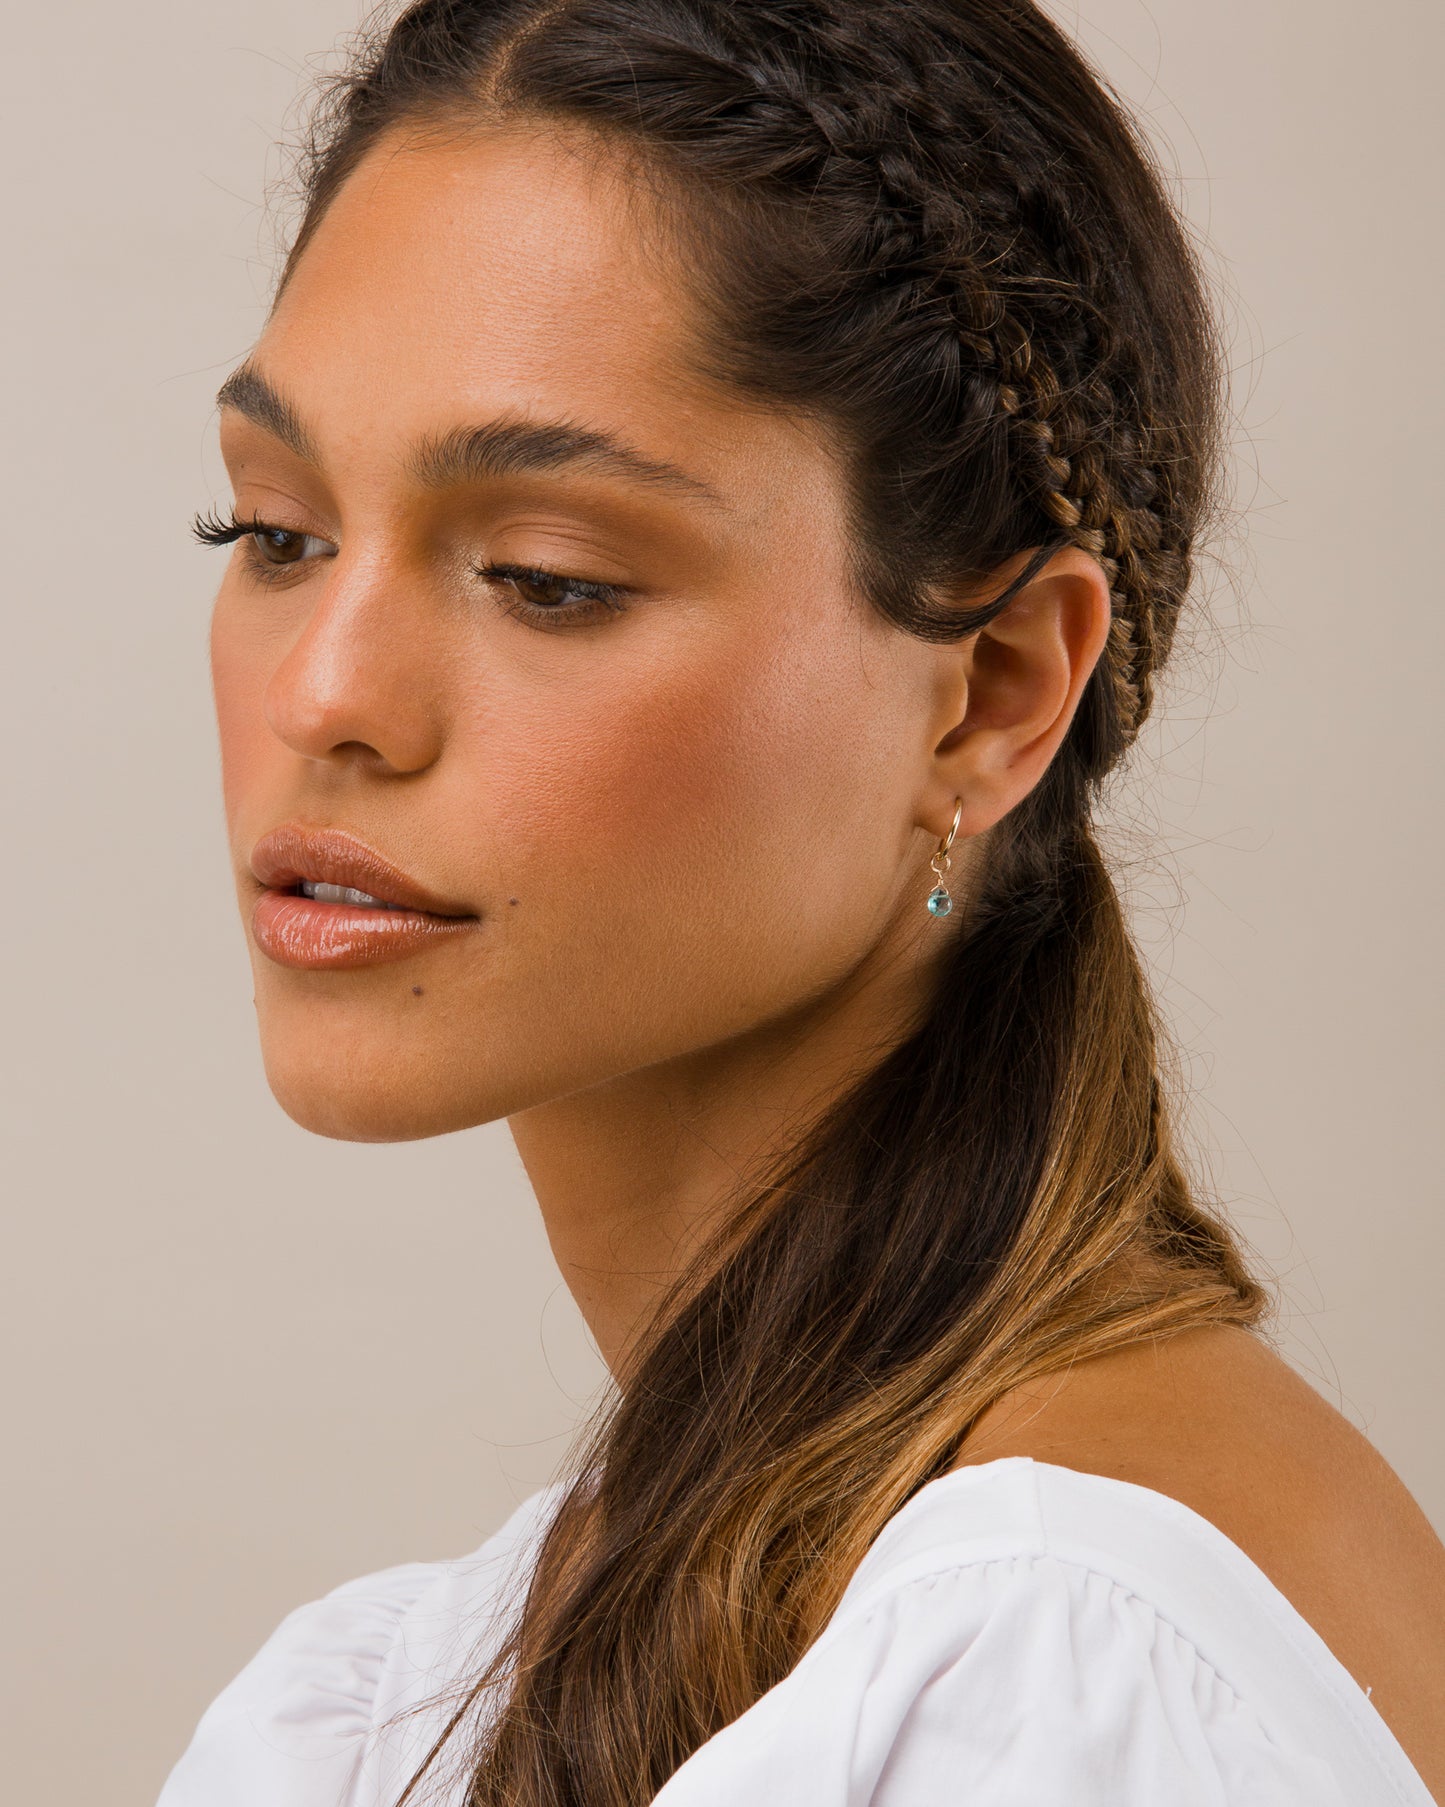 14K Gold Filled Green Apatite Hoop Earrings | Inspiration Her Jewellery